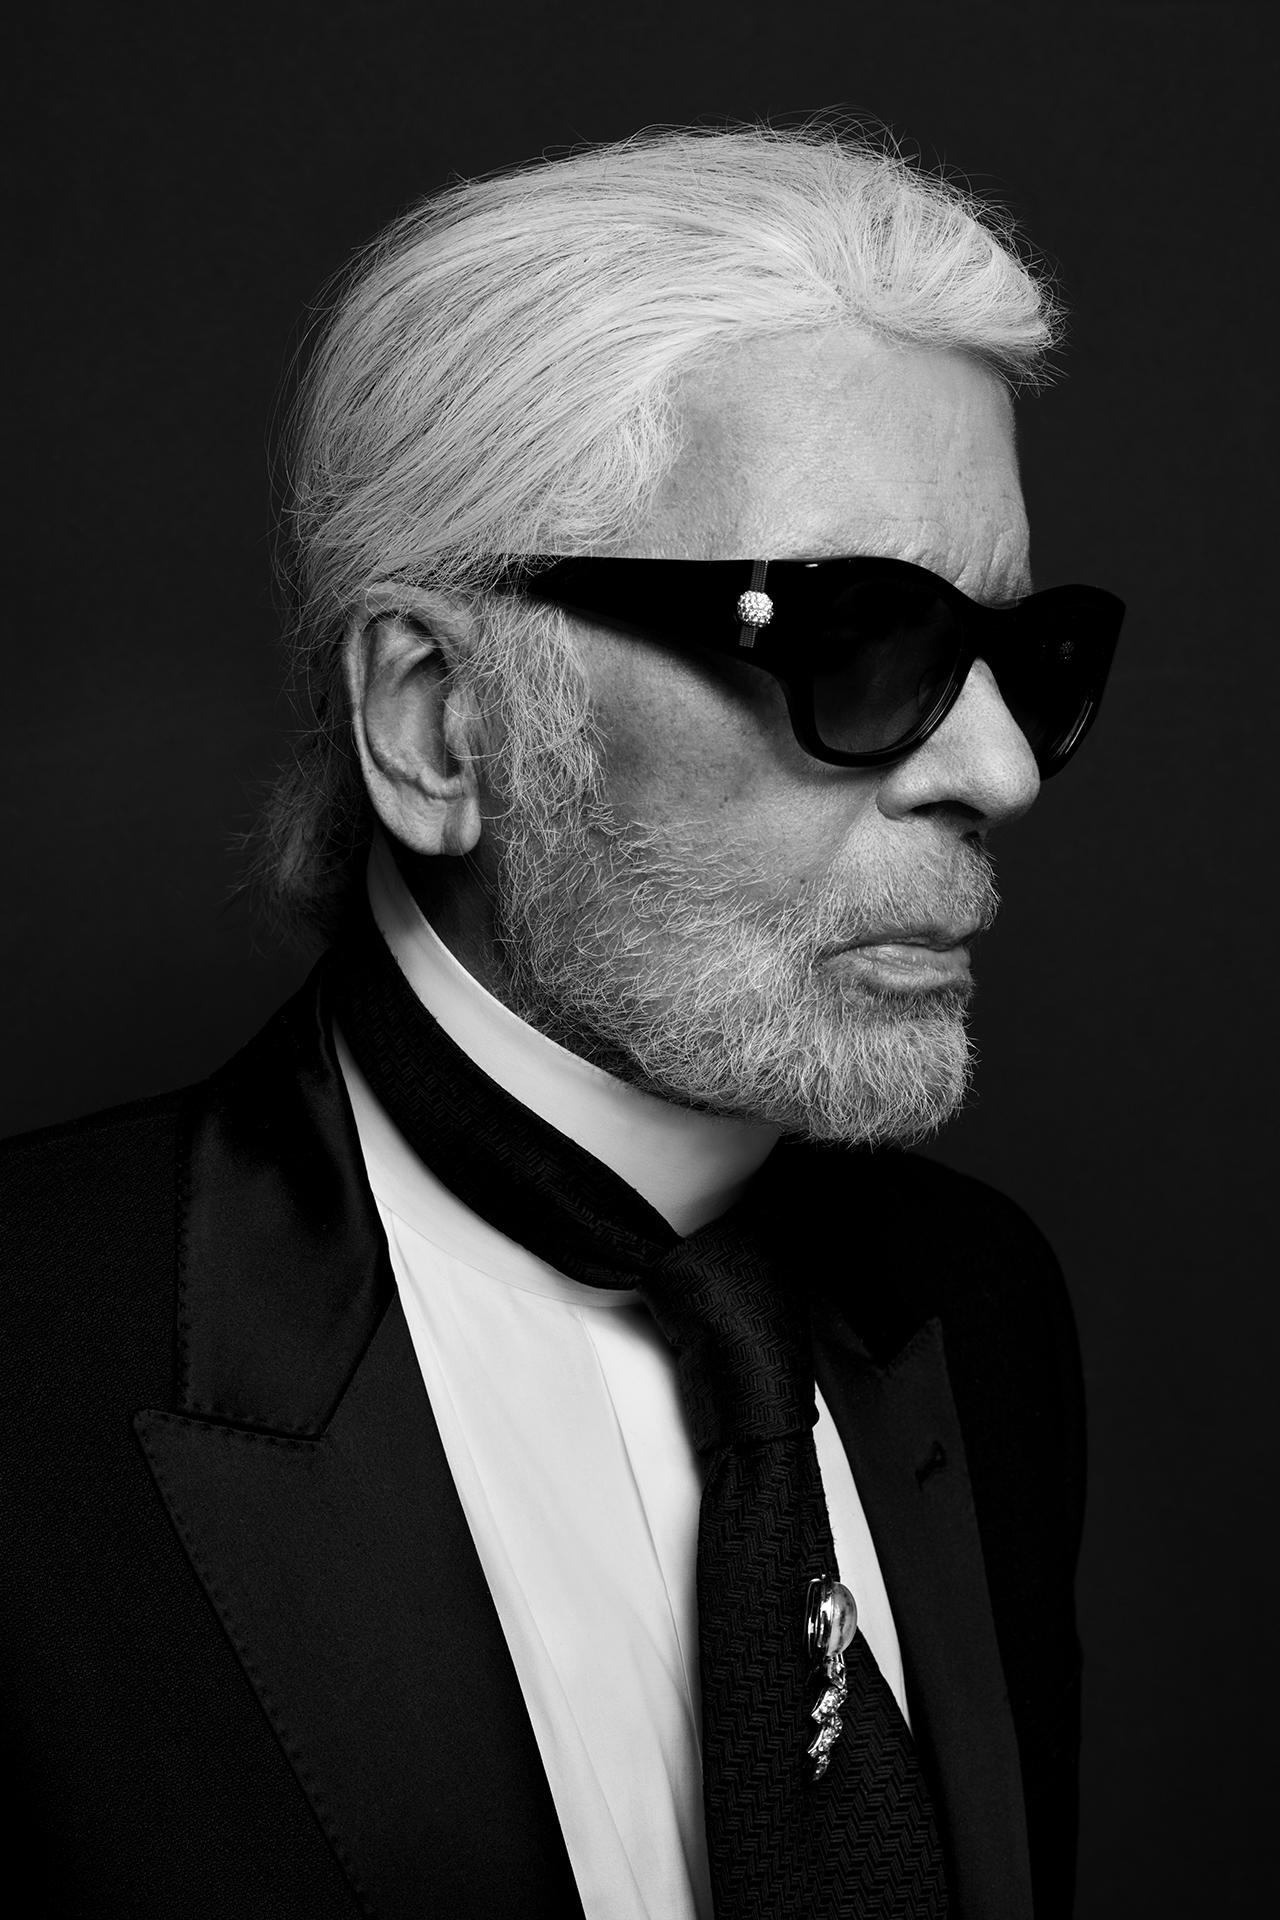 Fashion designer Karl Lagerfeld, Chanel's creative director, dead at 85